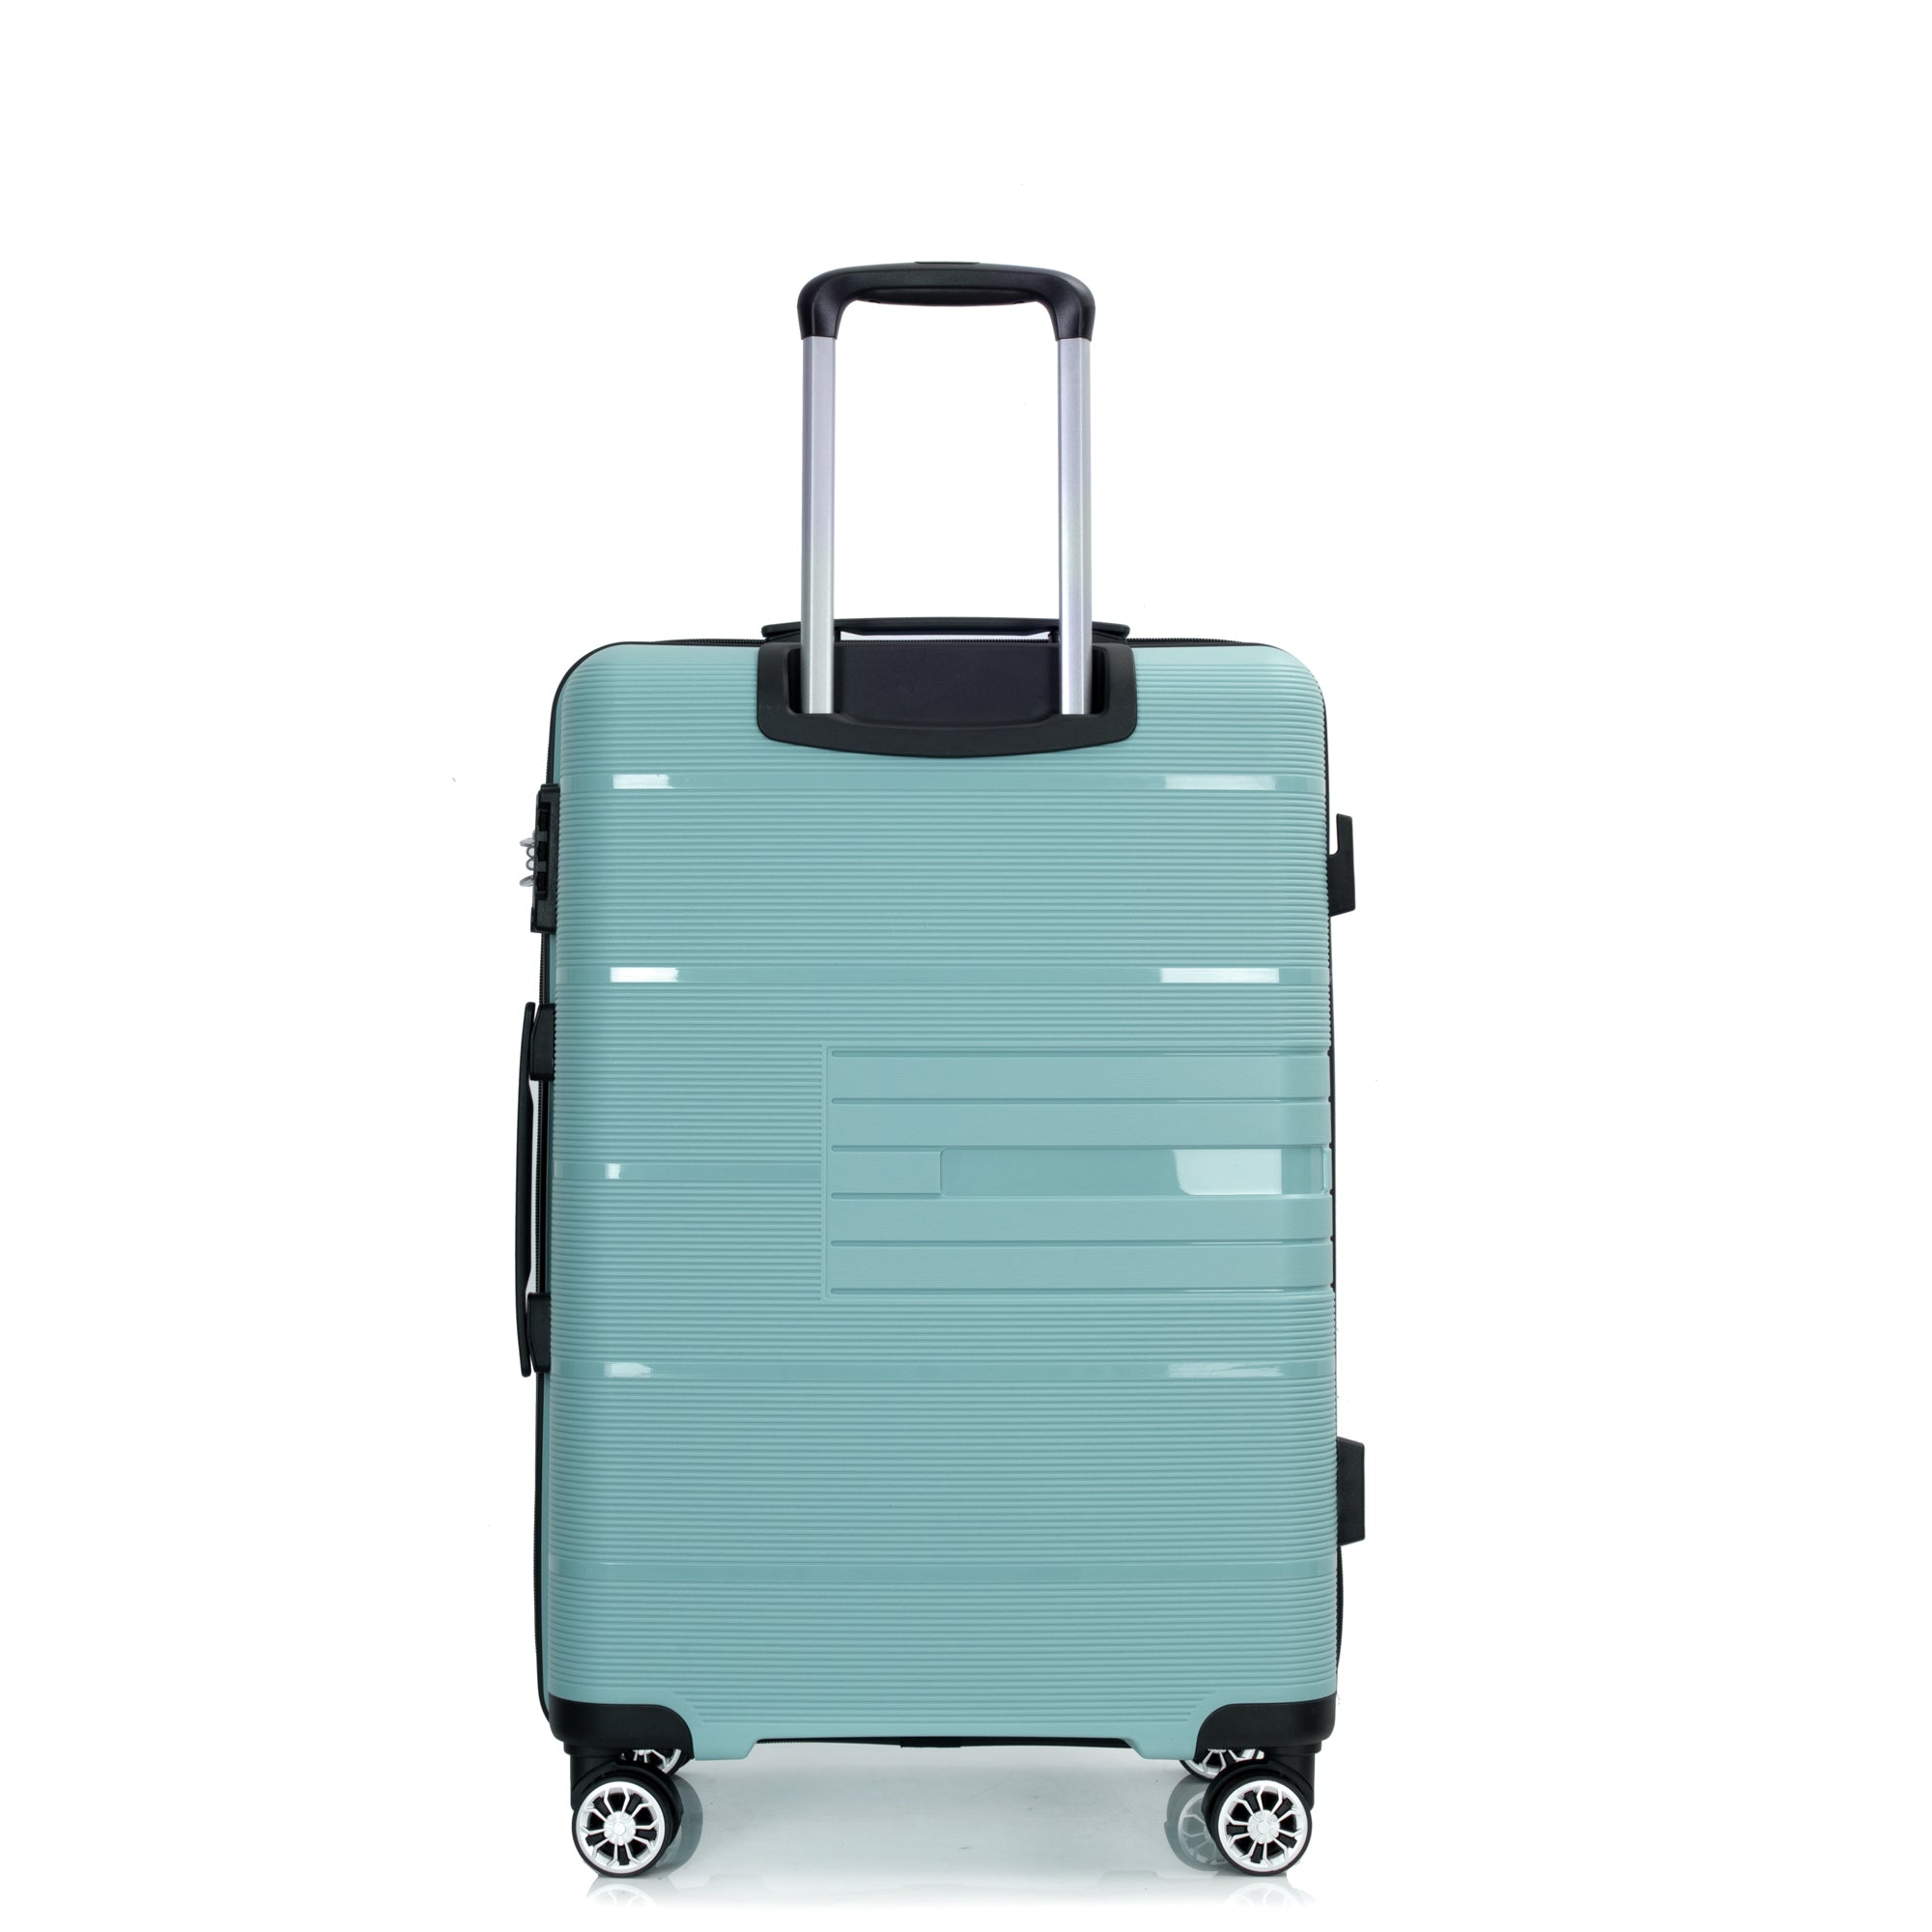 Hardshell Suitcase Double Spinner Wheels PP Luggage light green-polypropylene